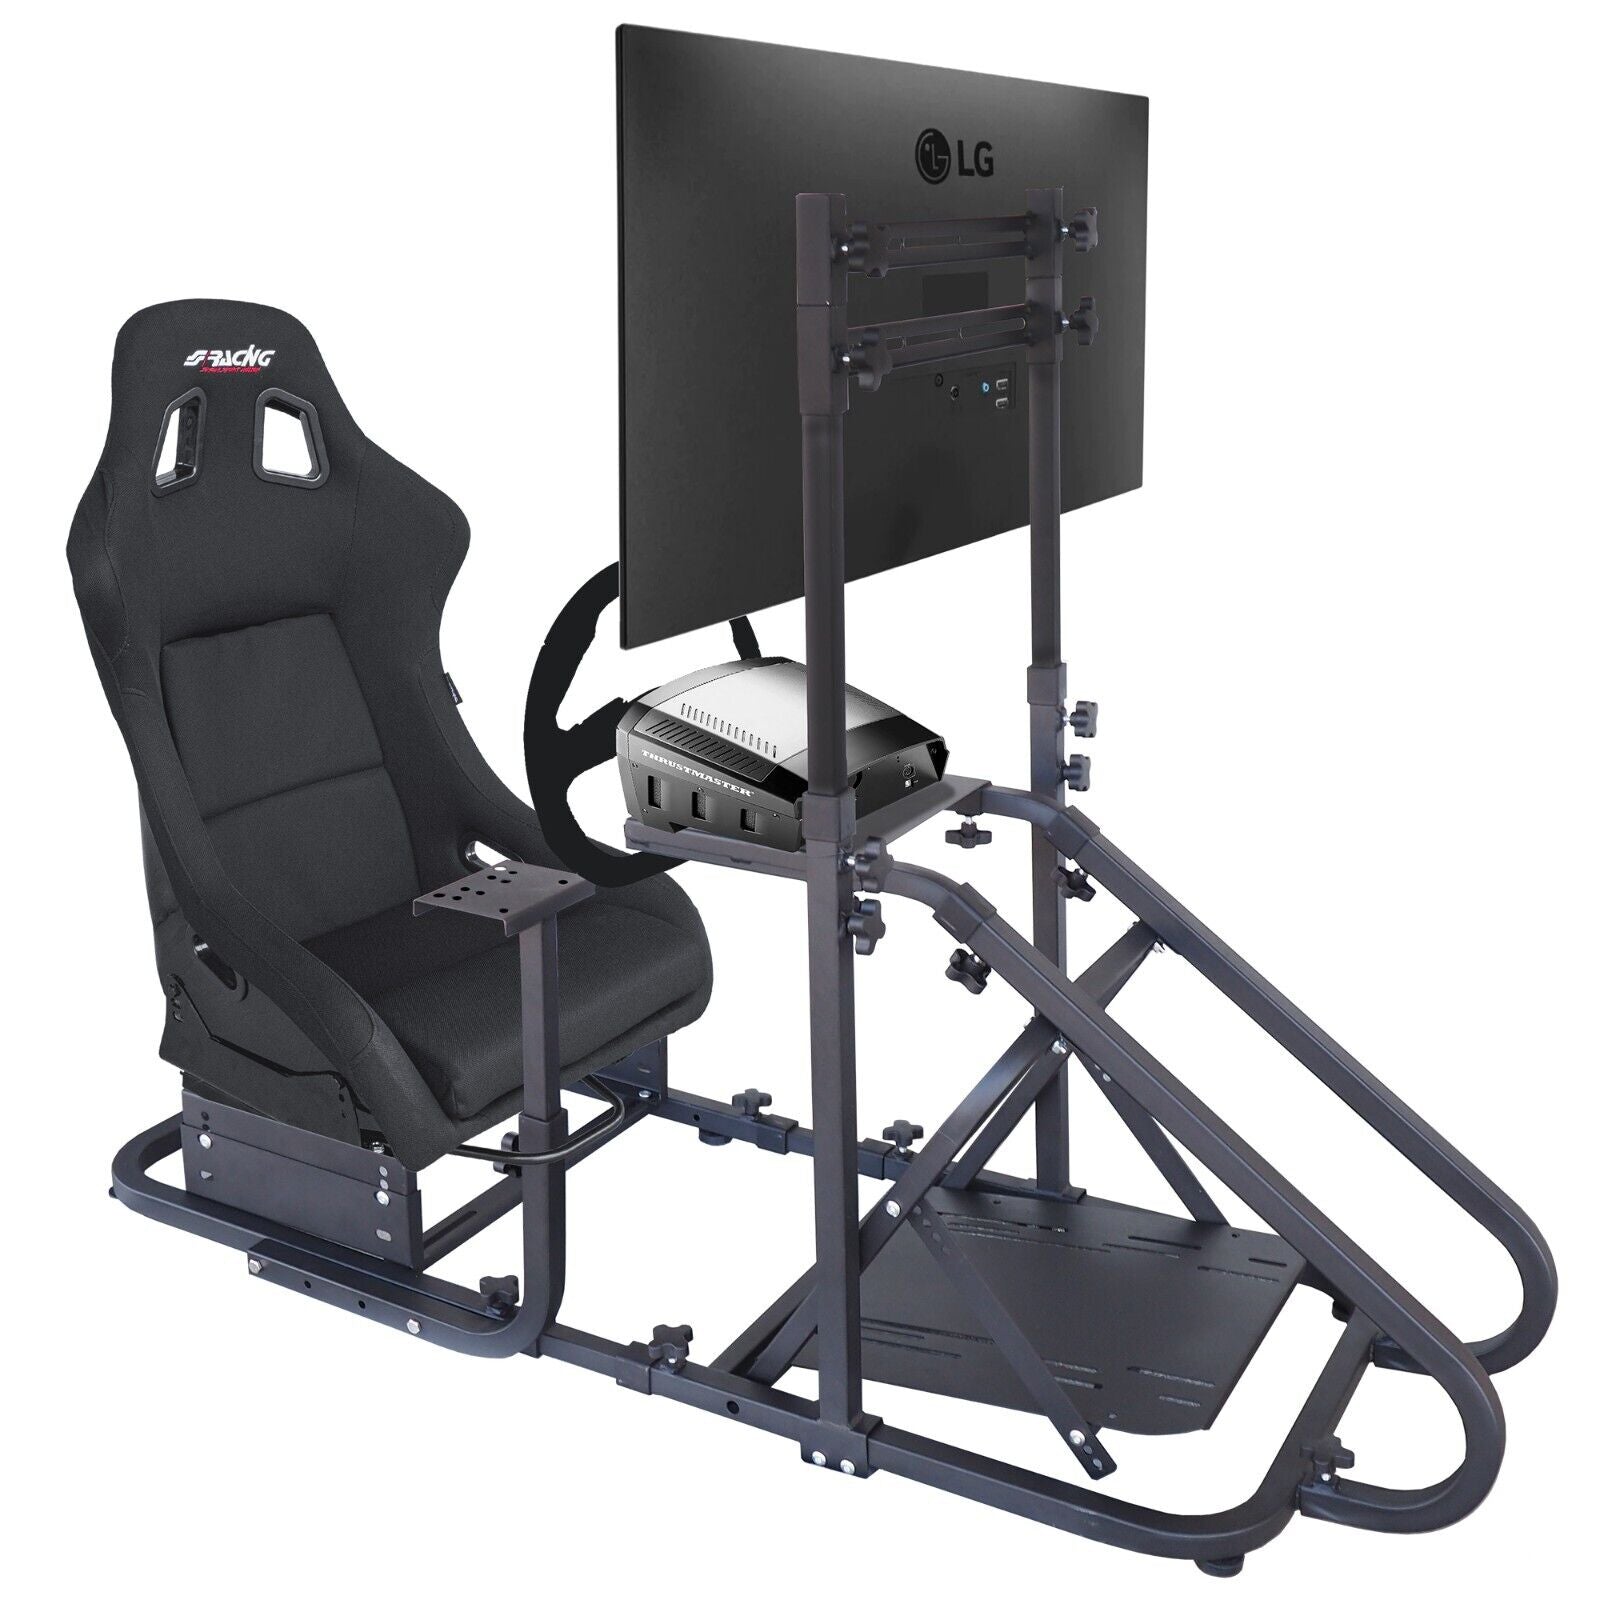 Luxe Driving Game Sim Racing Frame Rig für Bildschirm, Sitz, Rad, Pedale, Xbox, PS, PC